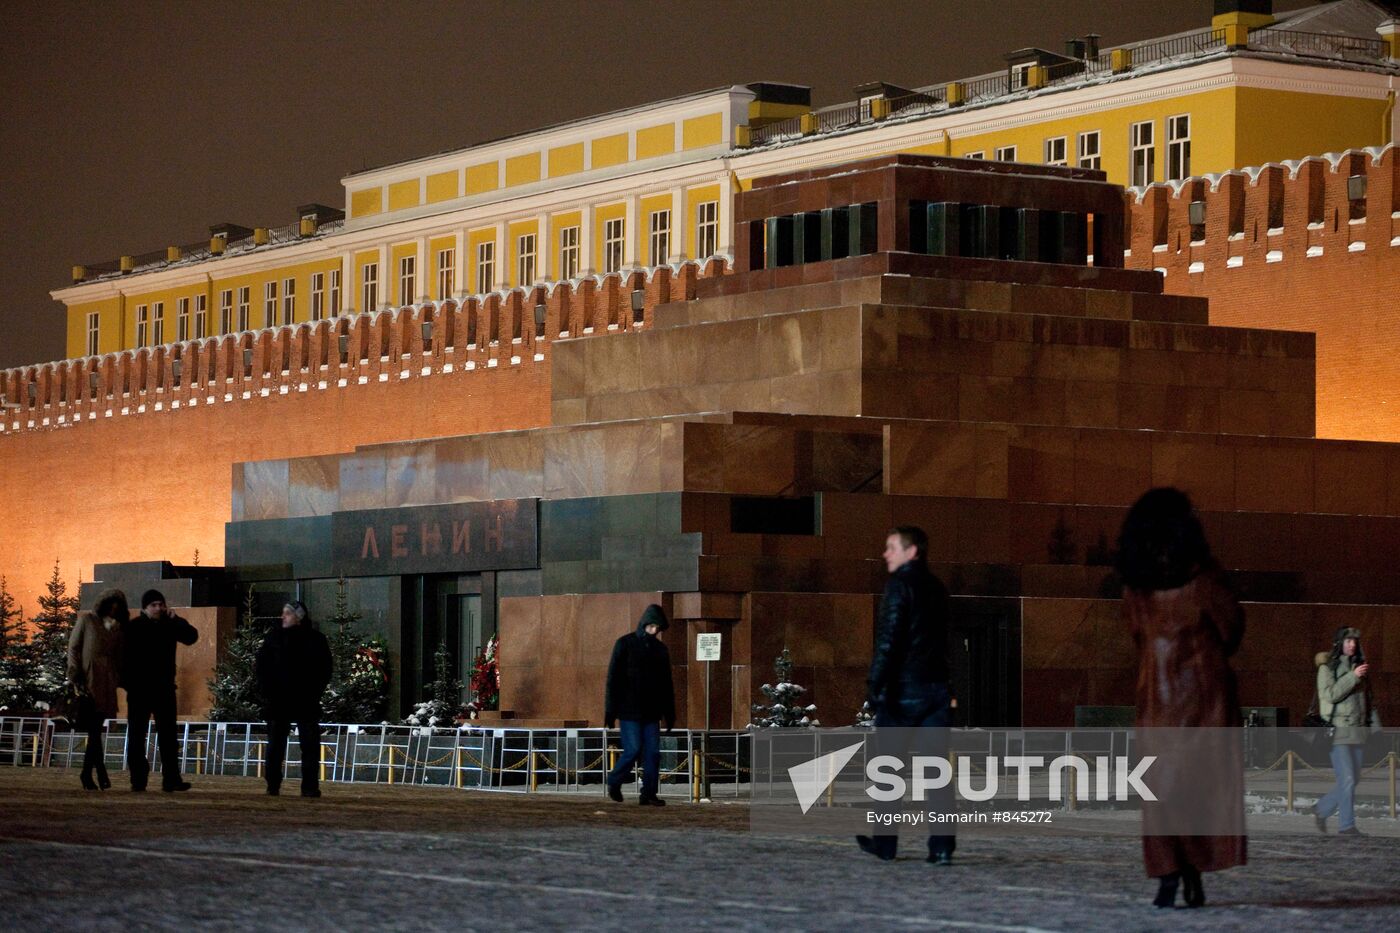 Lenin's Mausoleum at Red Square